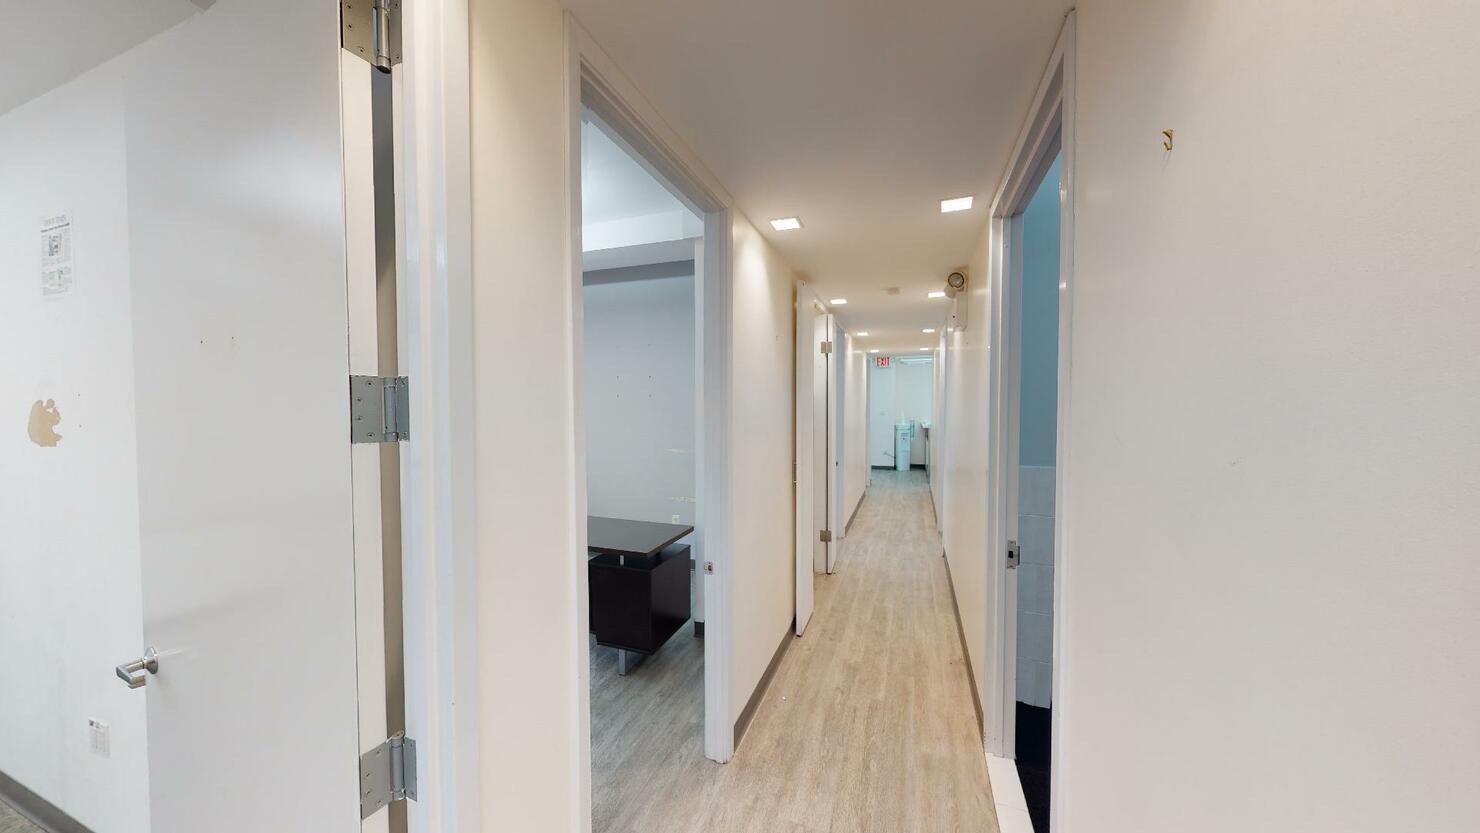 369 Lexington Avenue Office Space, #8A - Hallway